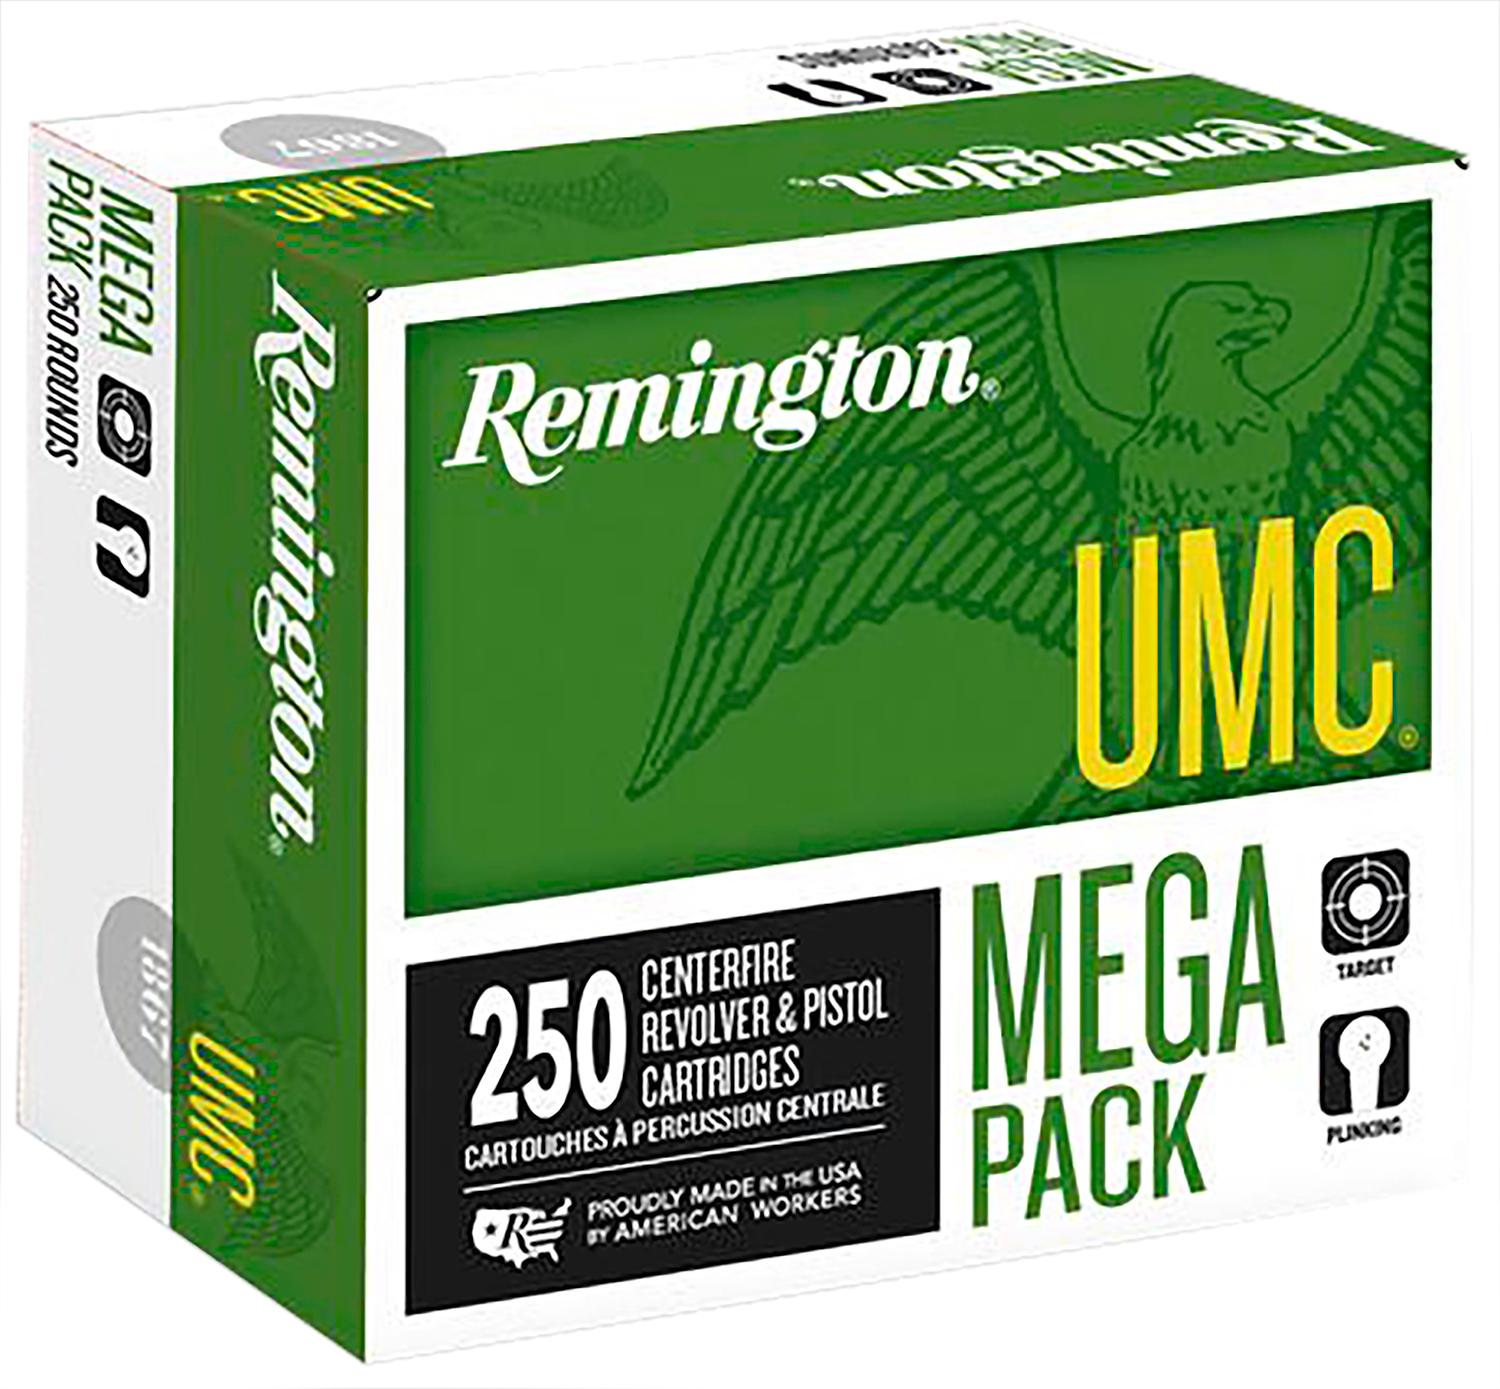  Remington Umc 38 Special 130 Grain Fmj Ammunition